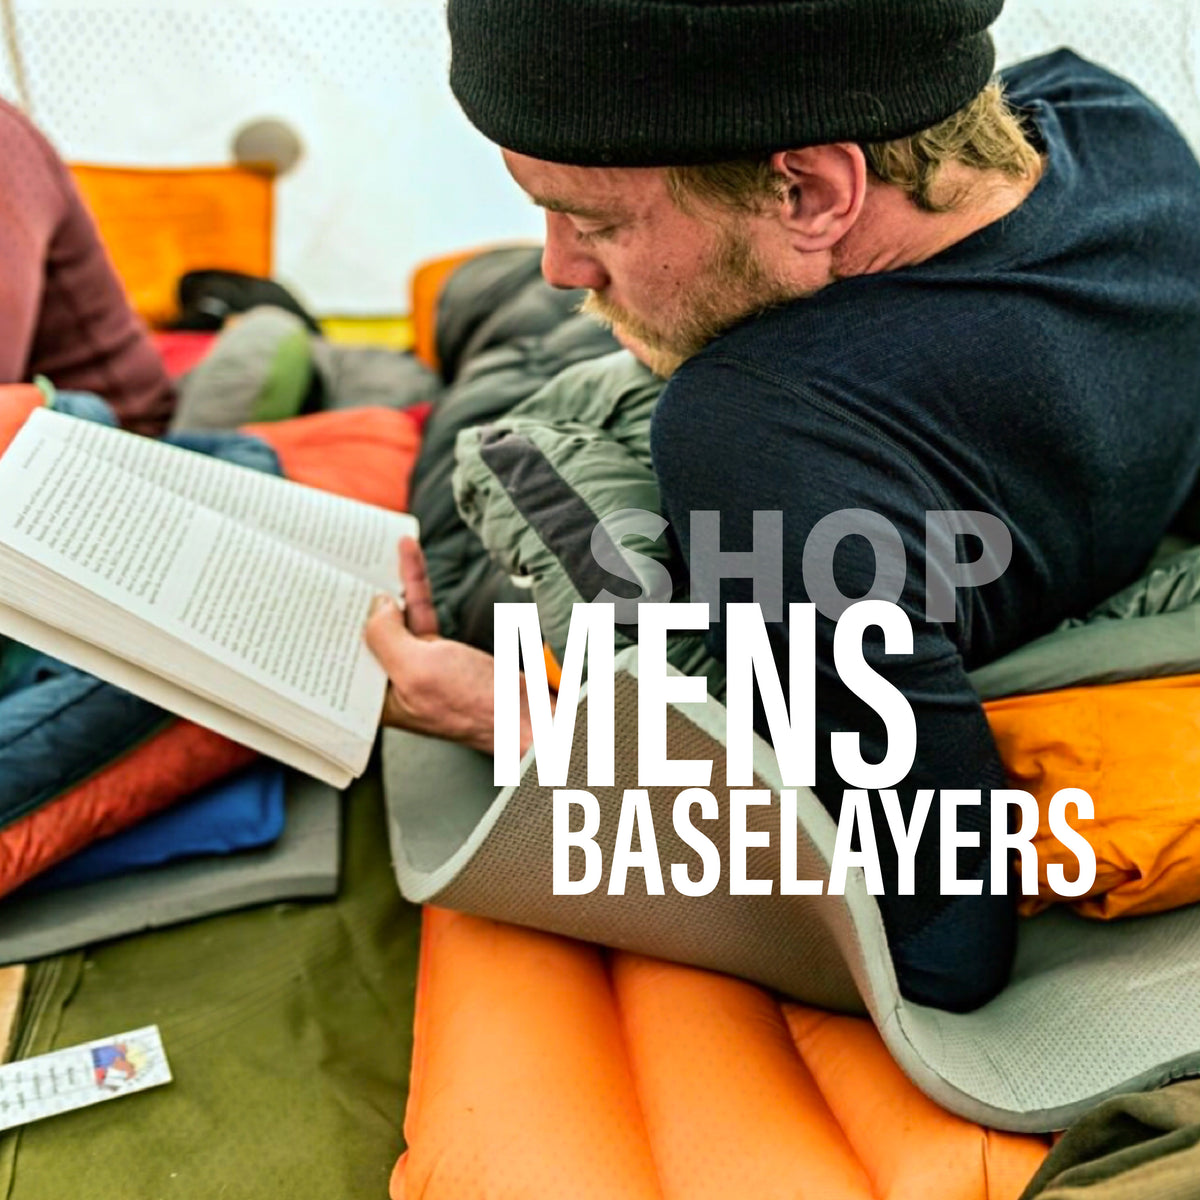 Men's Baselayers